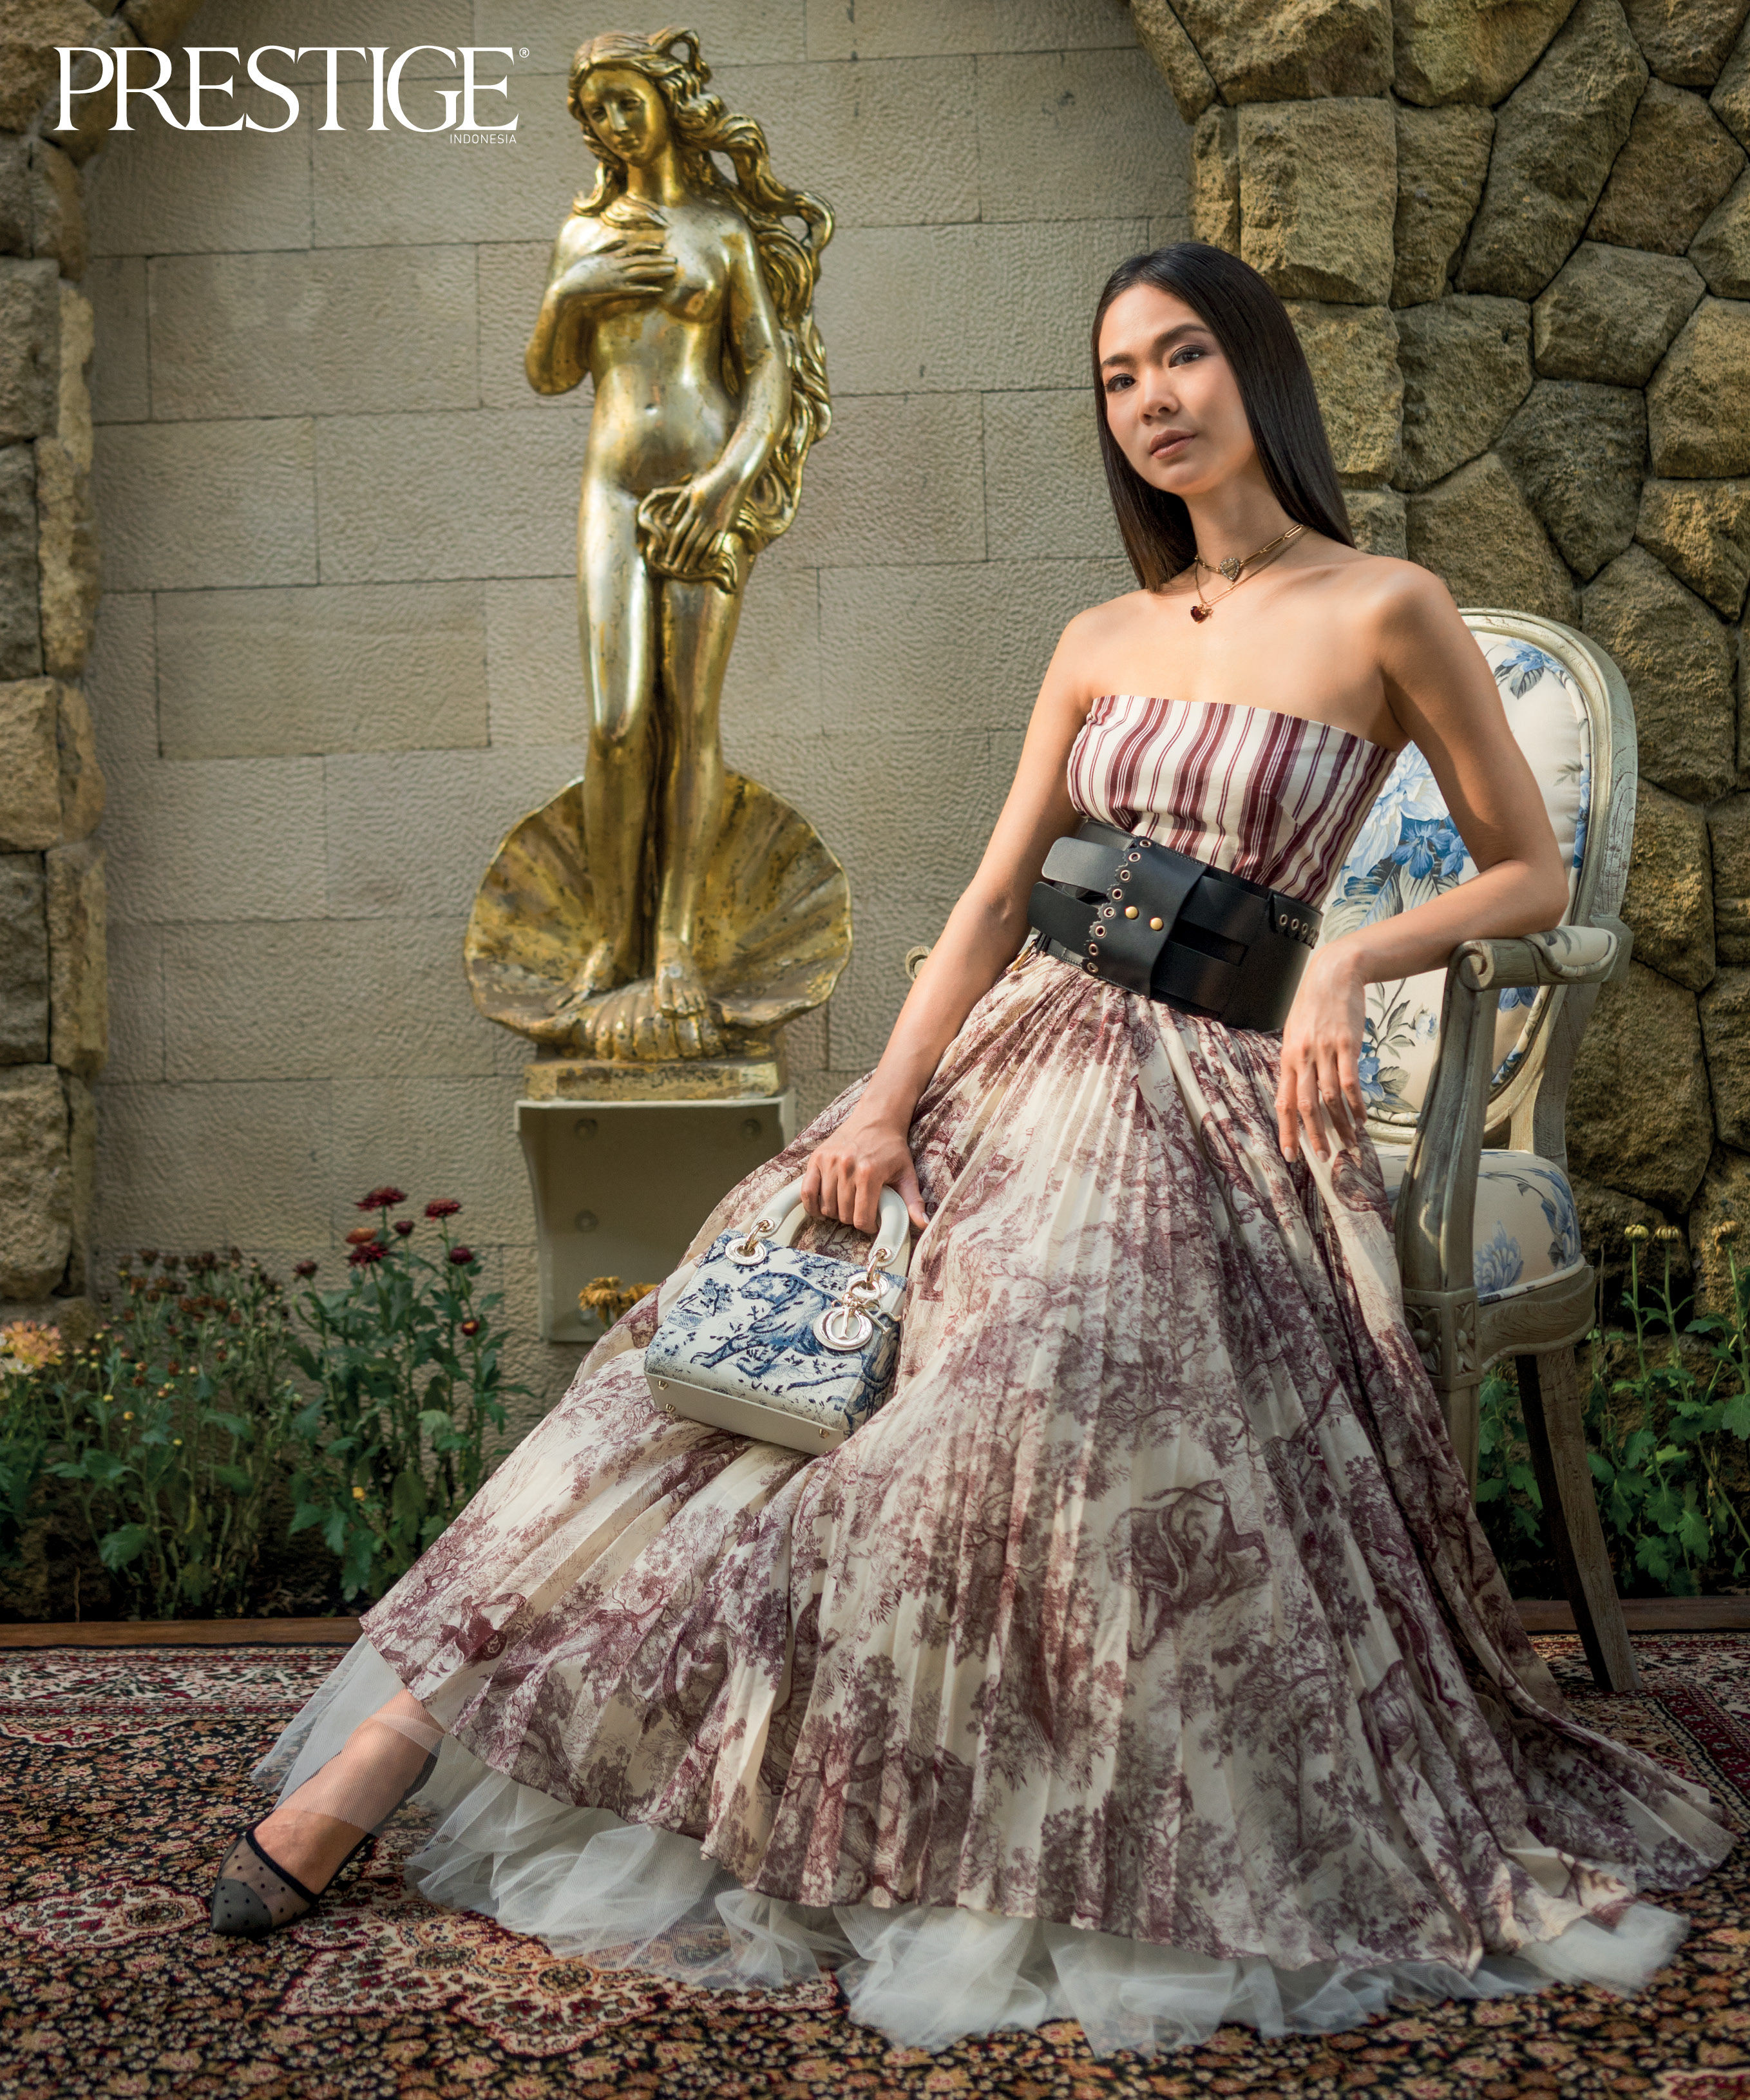 Prestige x Dior: Health & Beauty Tips from Five Amazing Ladies